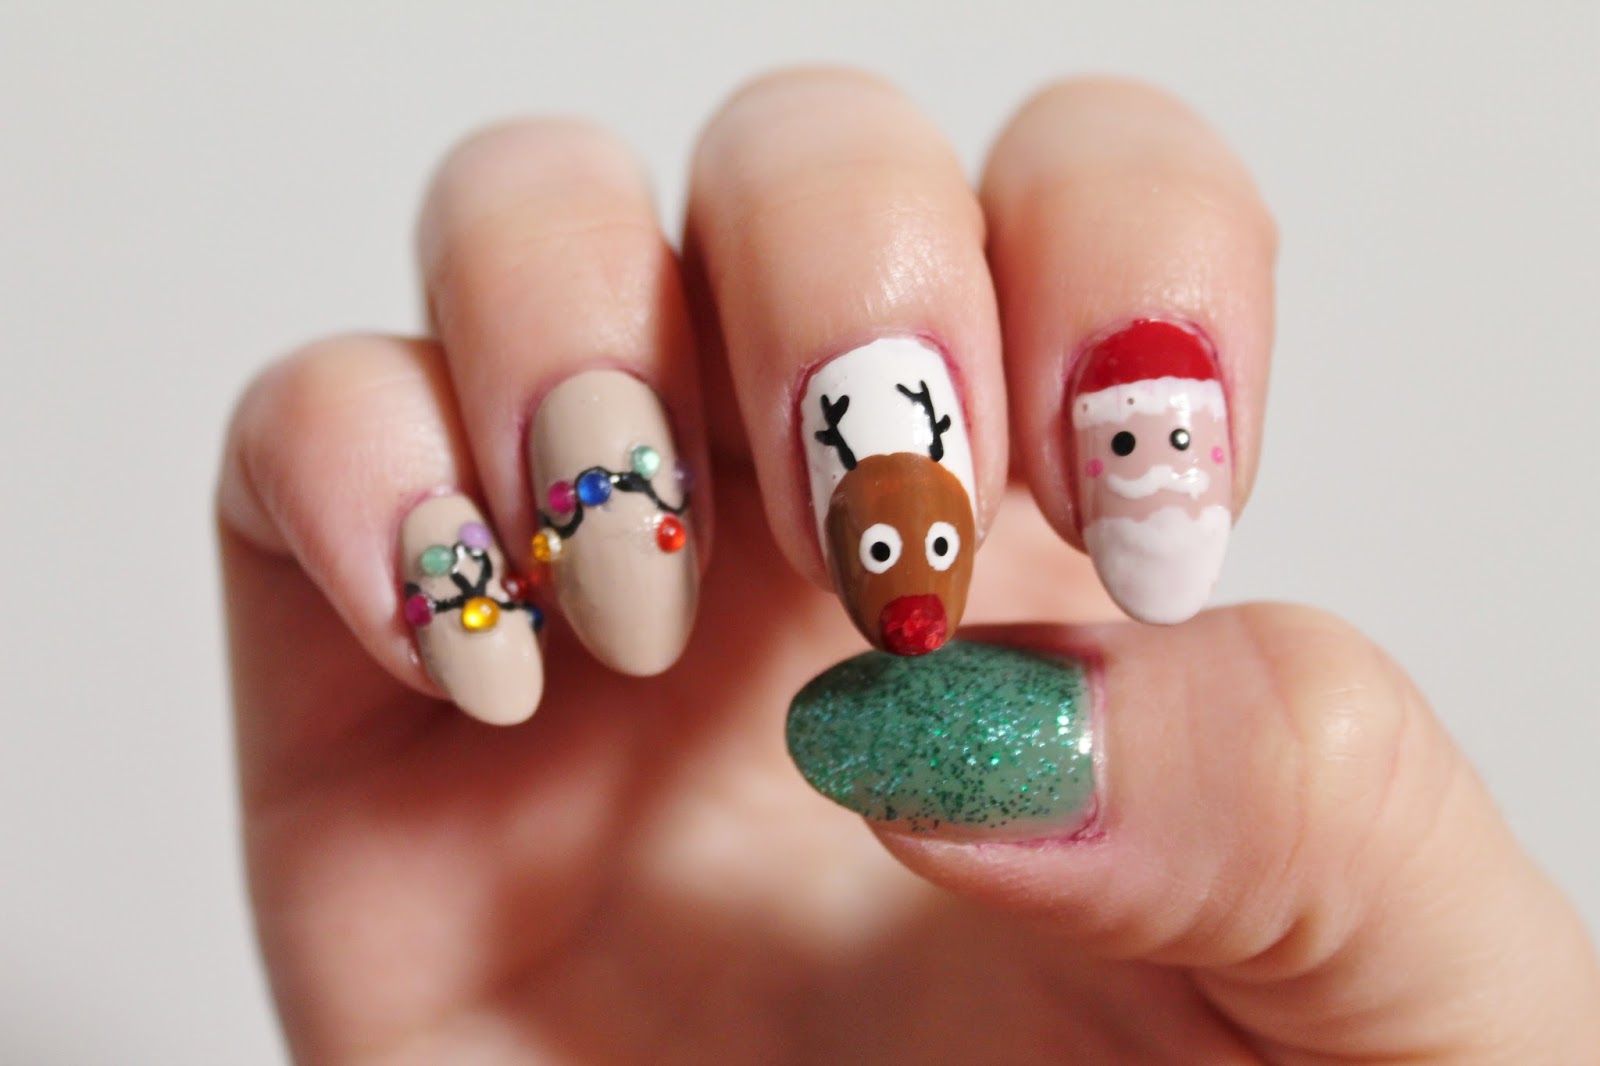 2. "Christmas Nail Art Designs with Santa Claus" - wide 6